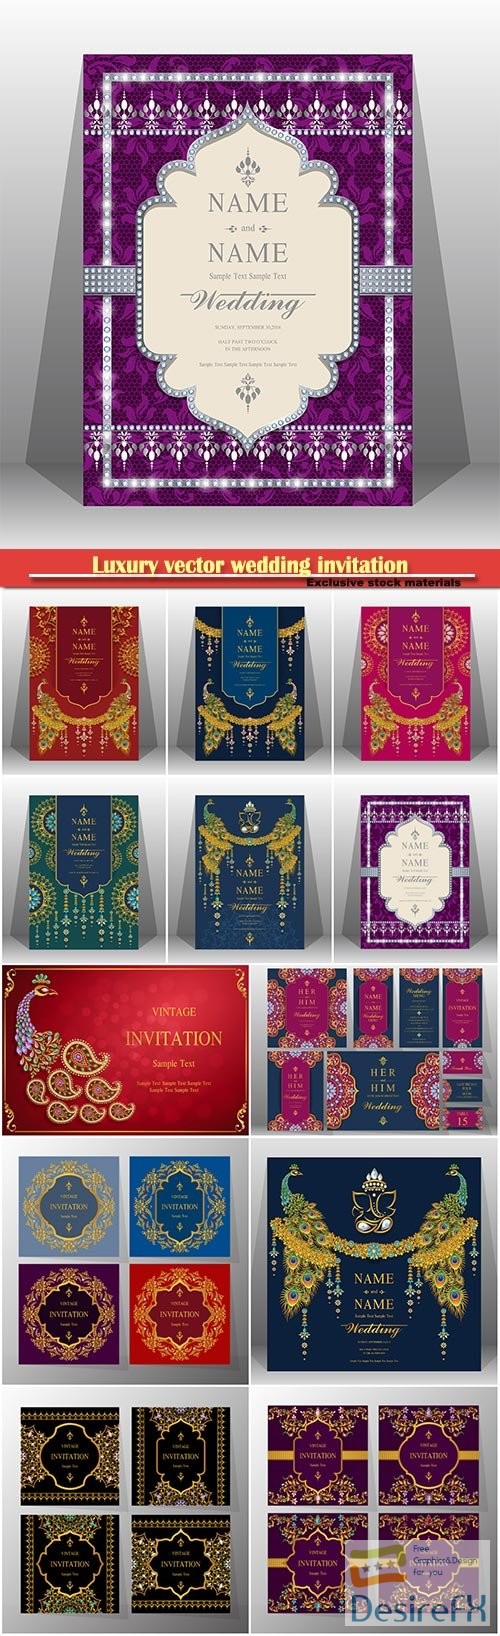 Luxury vector wedding invitation in oriental style